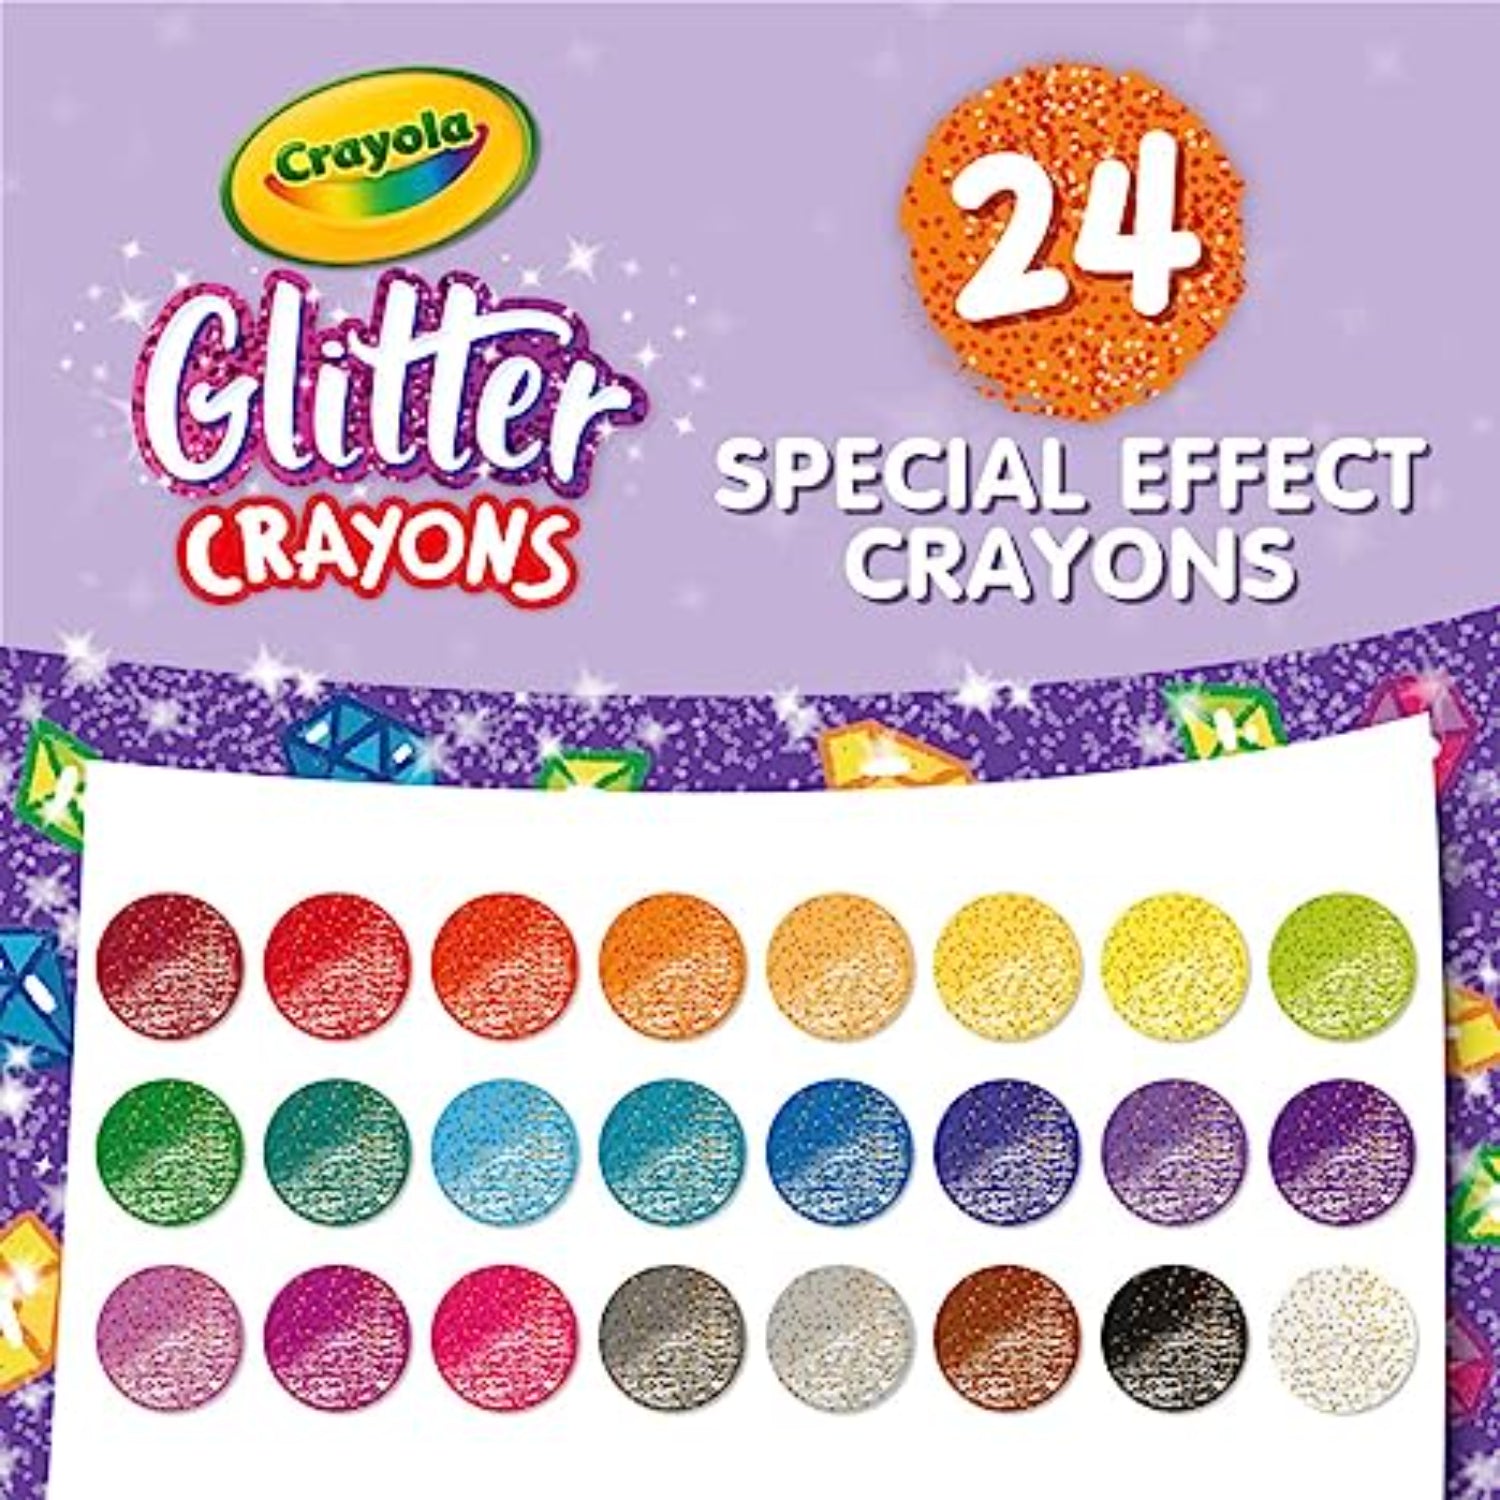 Crayola 24ct Glitter Crayons